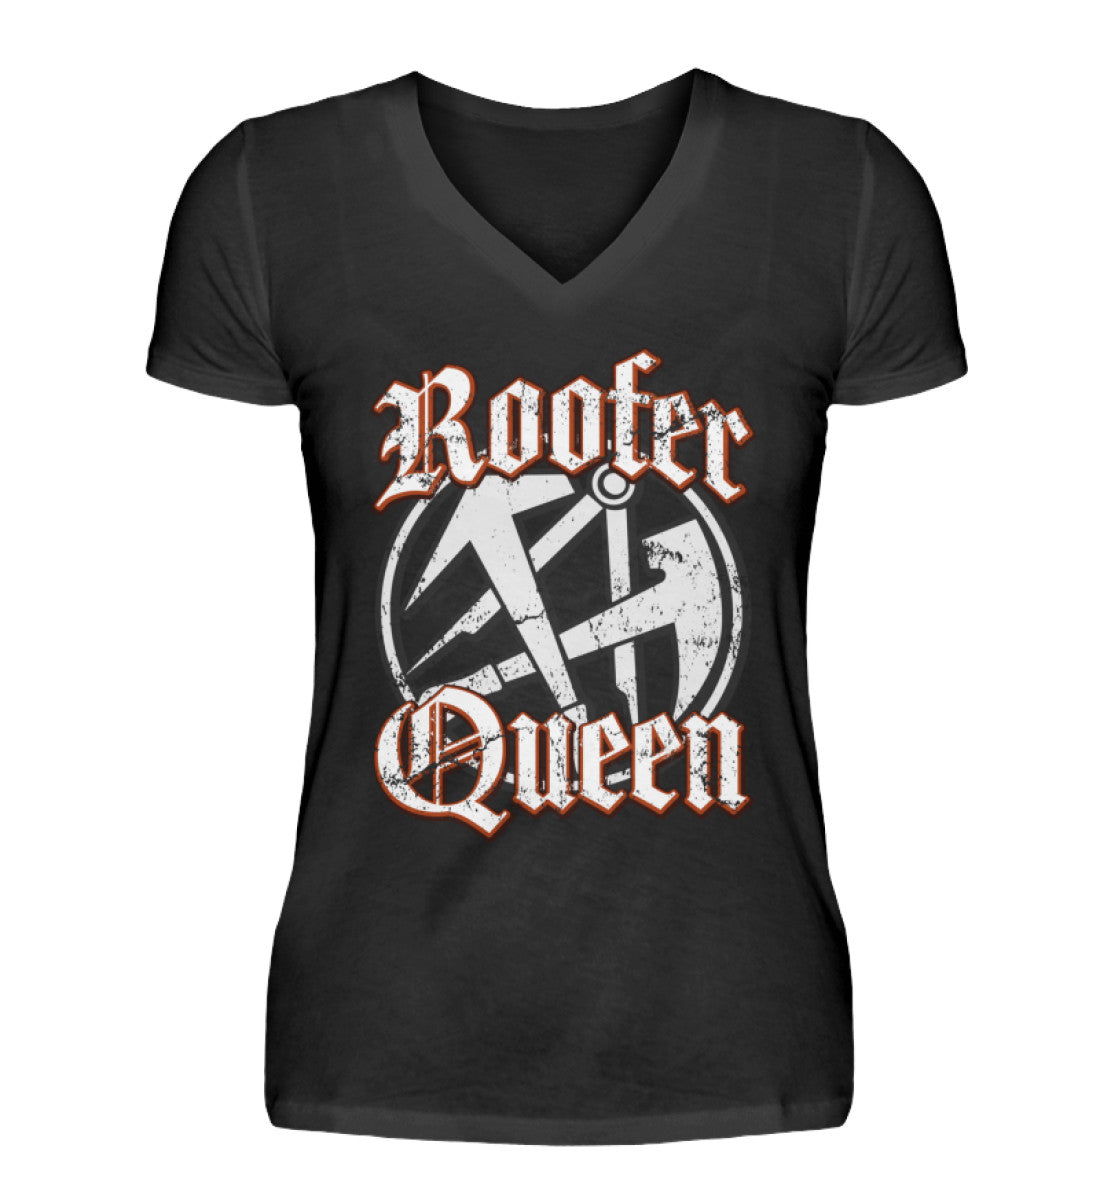 Roofer Queen - V-Neck Damenshirt €29.95 Rooferking